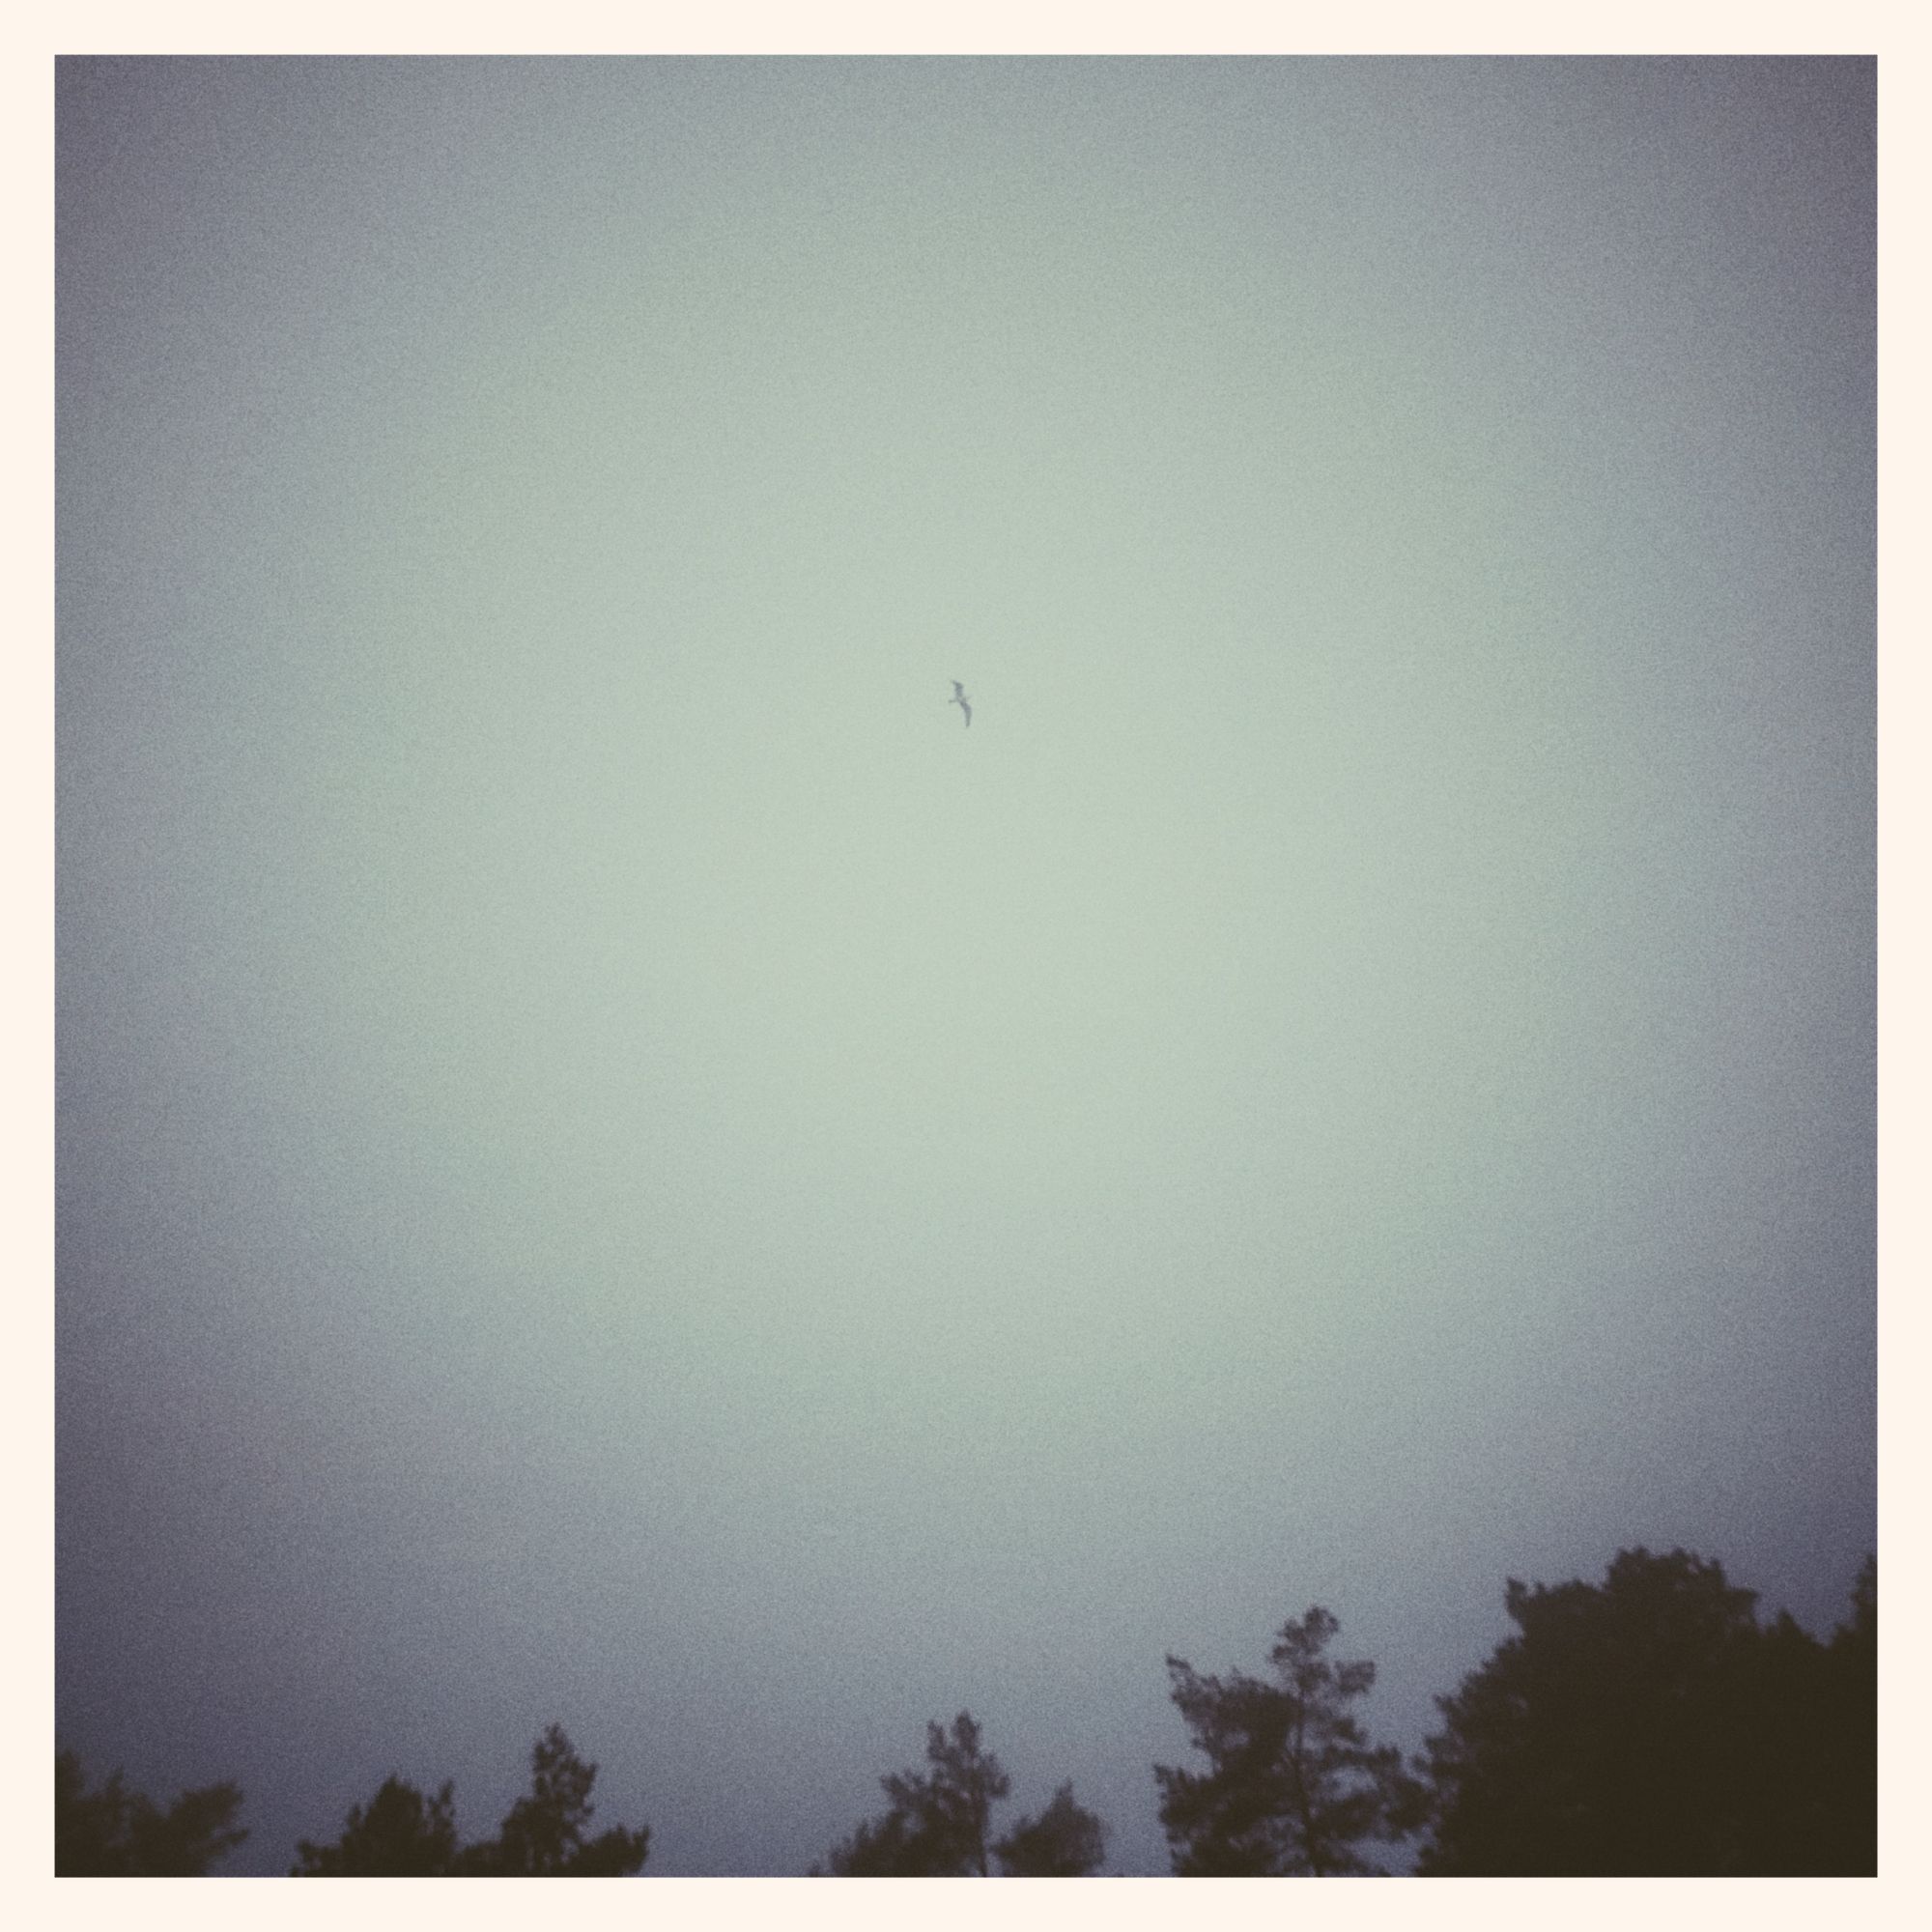 Seagulls in a grey sky. Trees below. 